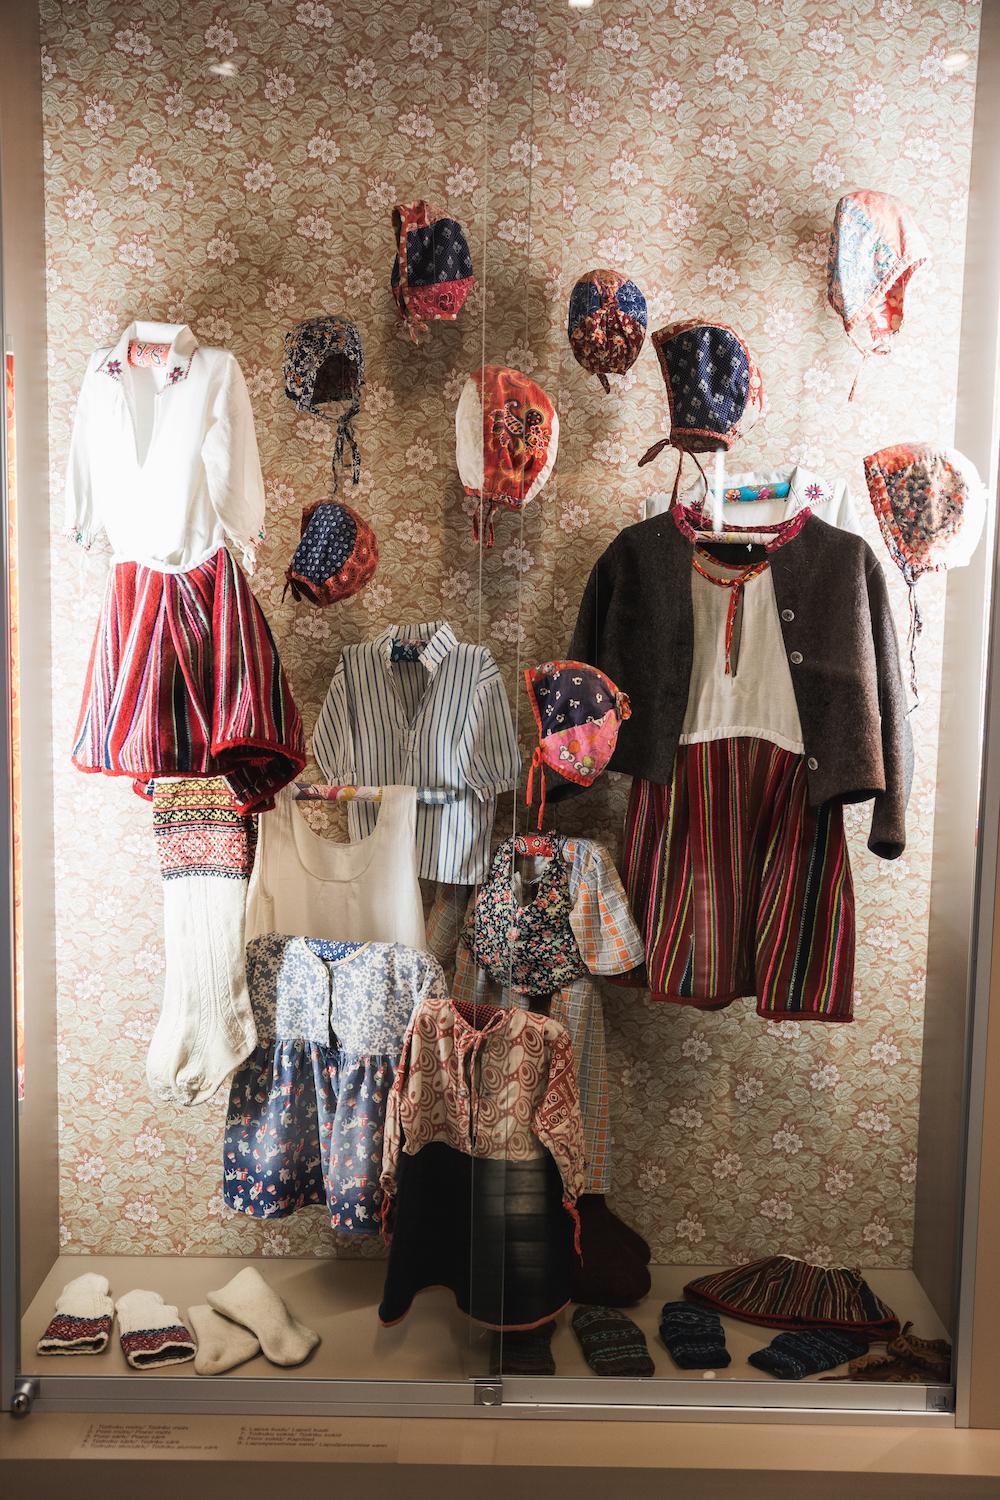 The Kihnu Museum displays the handicraft of Kihnu women. (Priidu Saart/Visit Estonia)